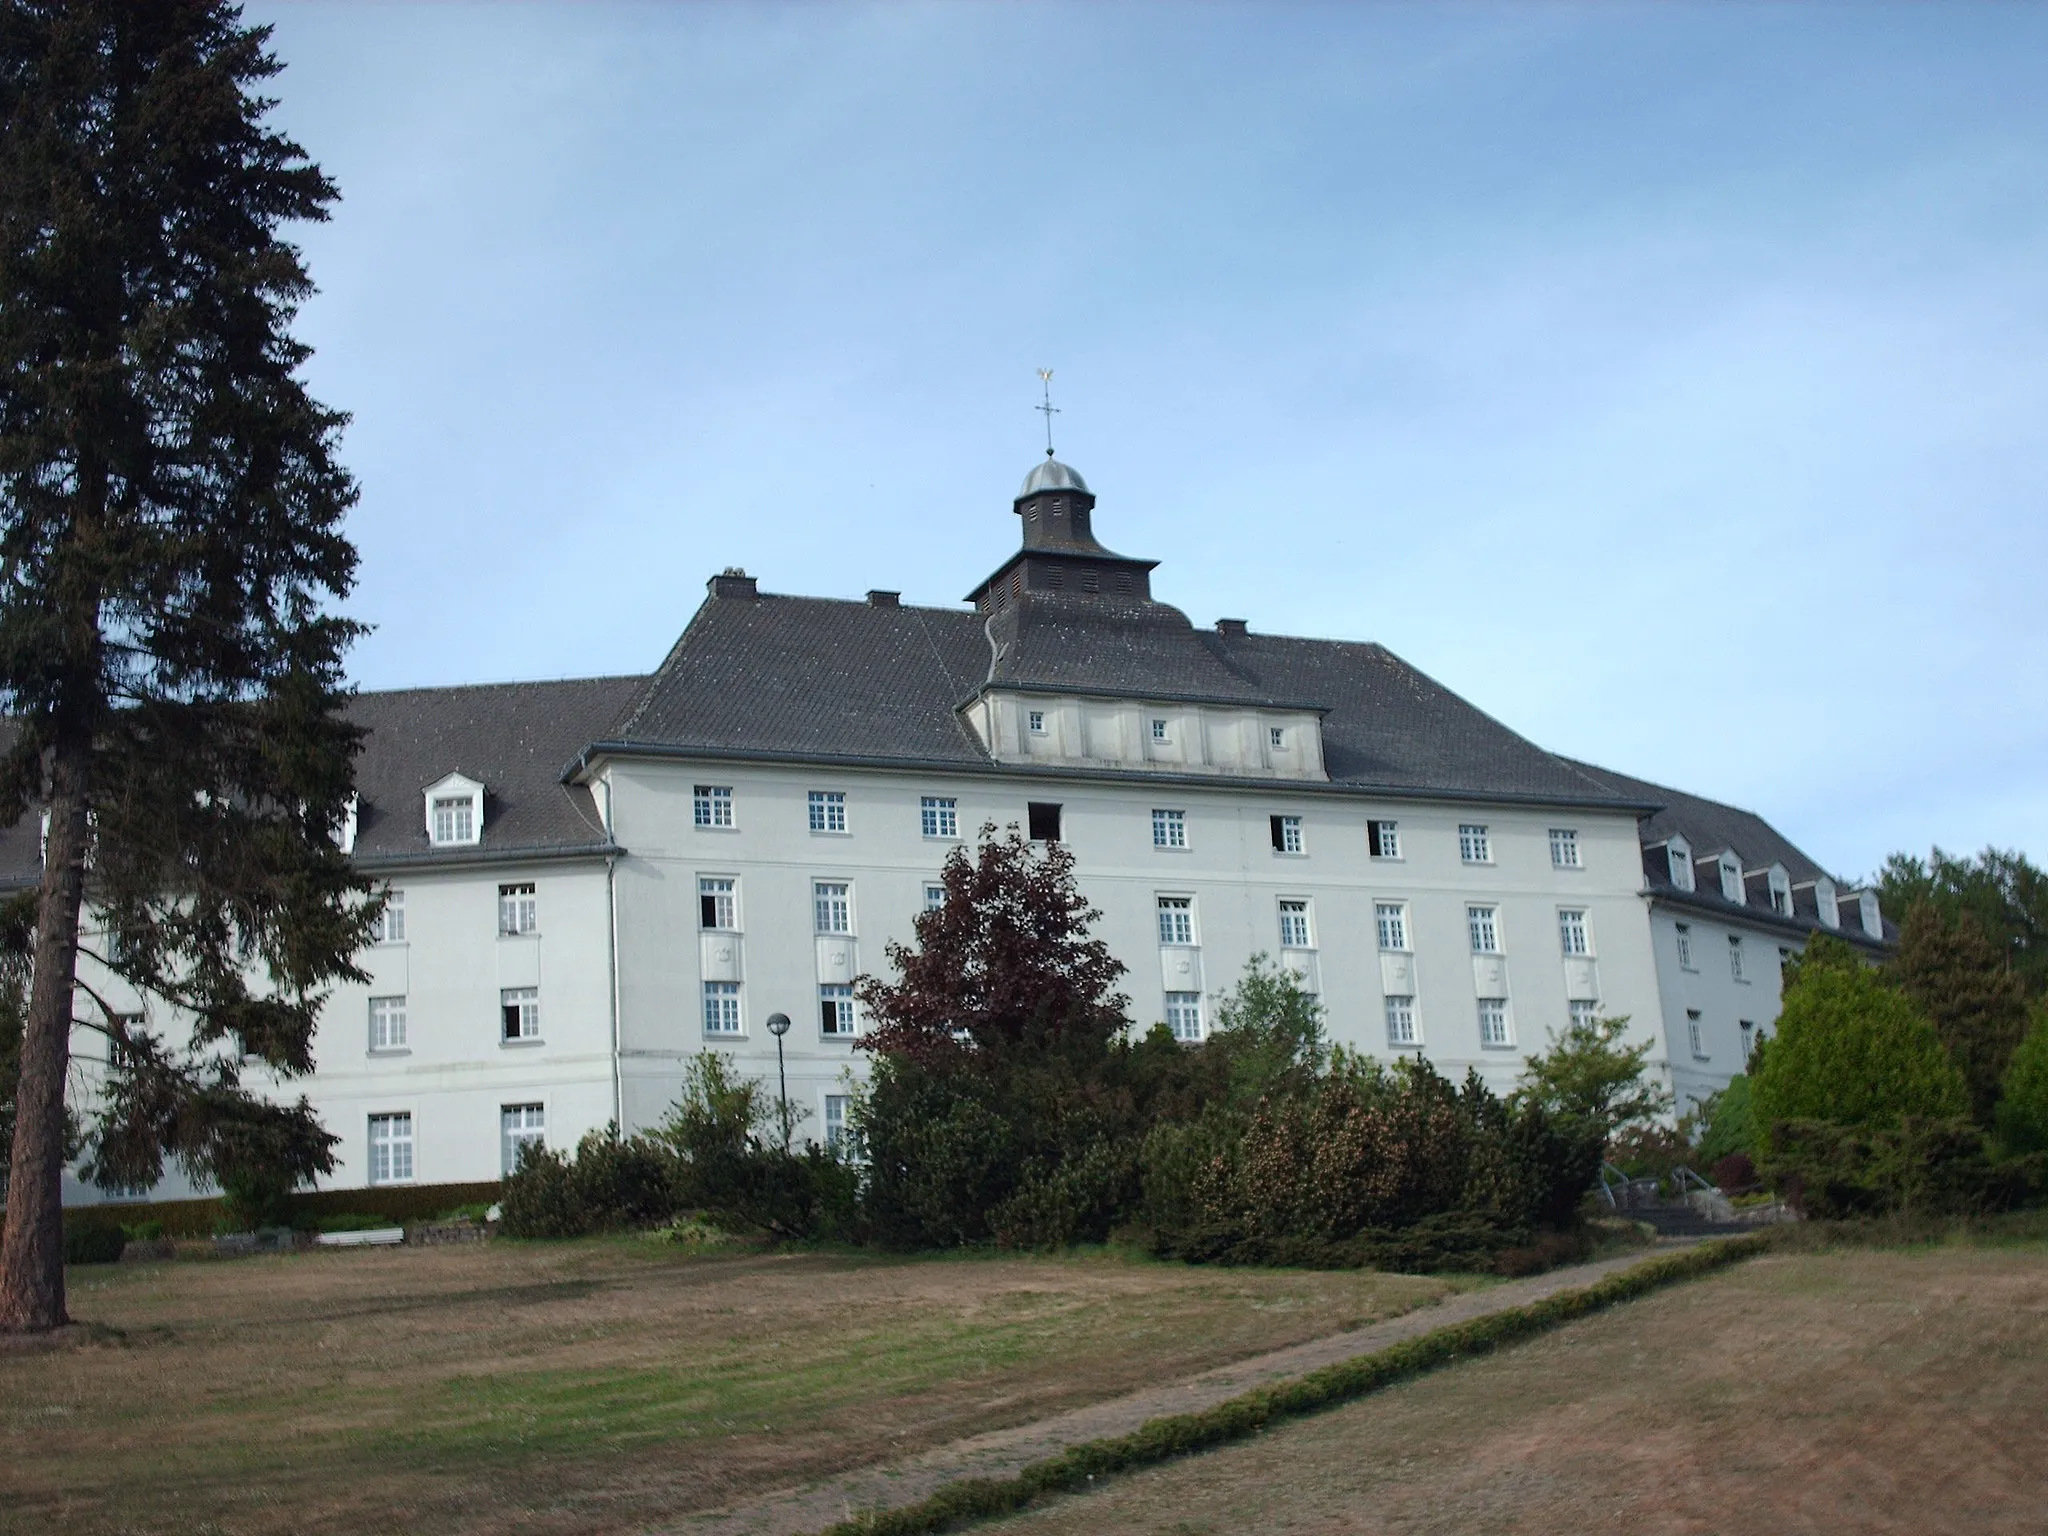 Photo showing: Pallottihaus (former Pallottines Monastery), Olpe, Germany